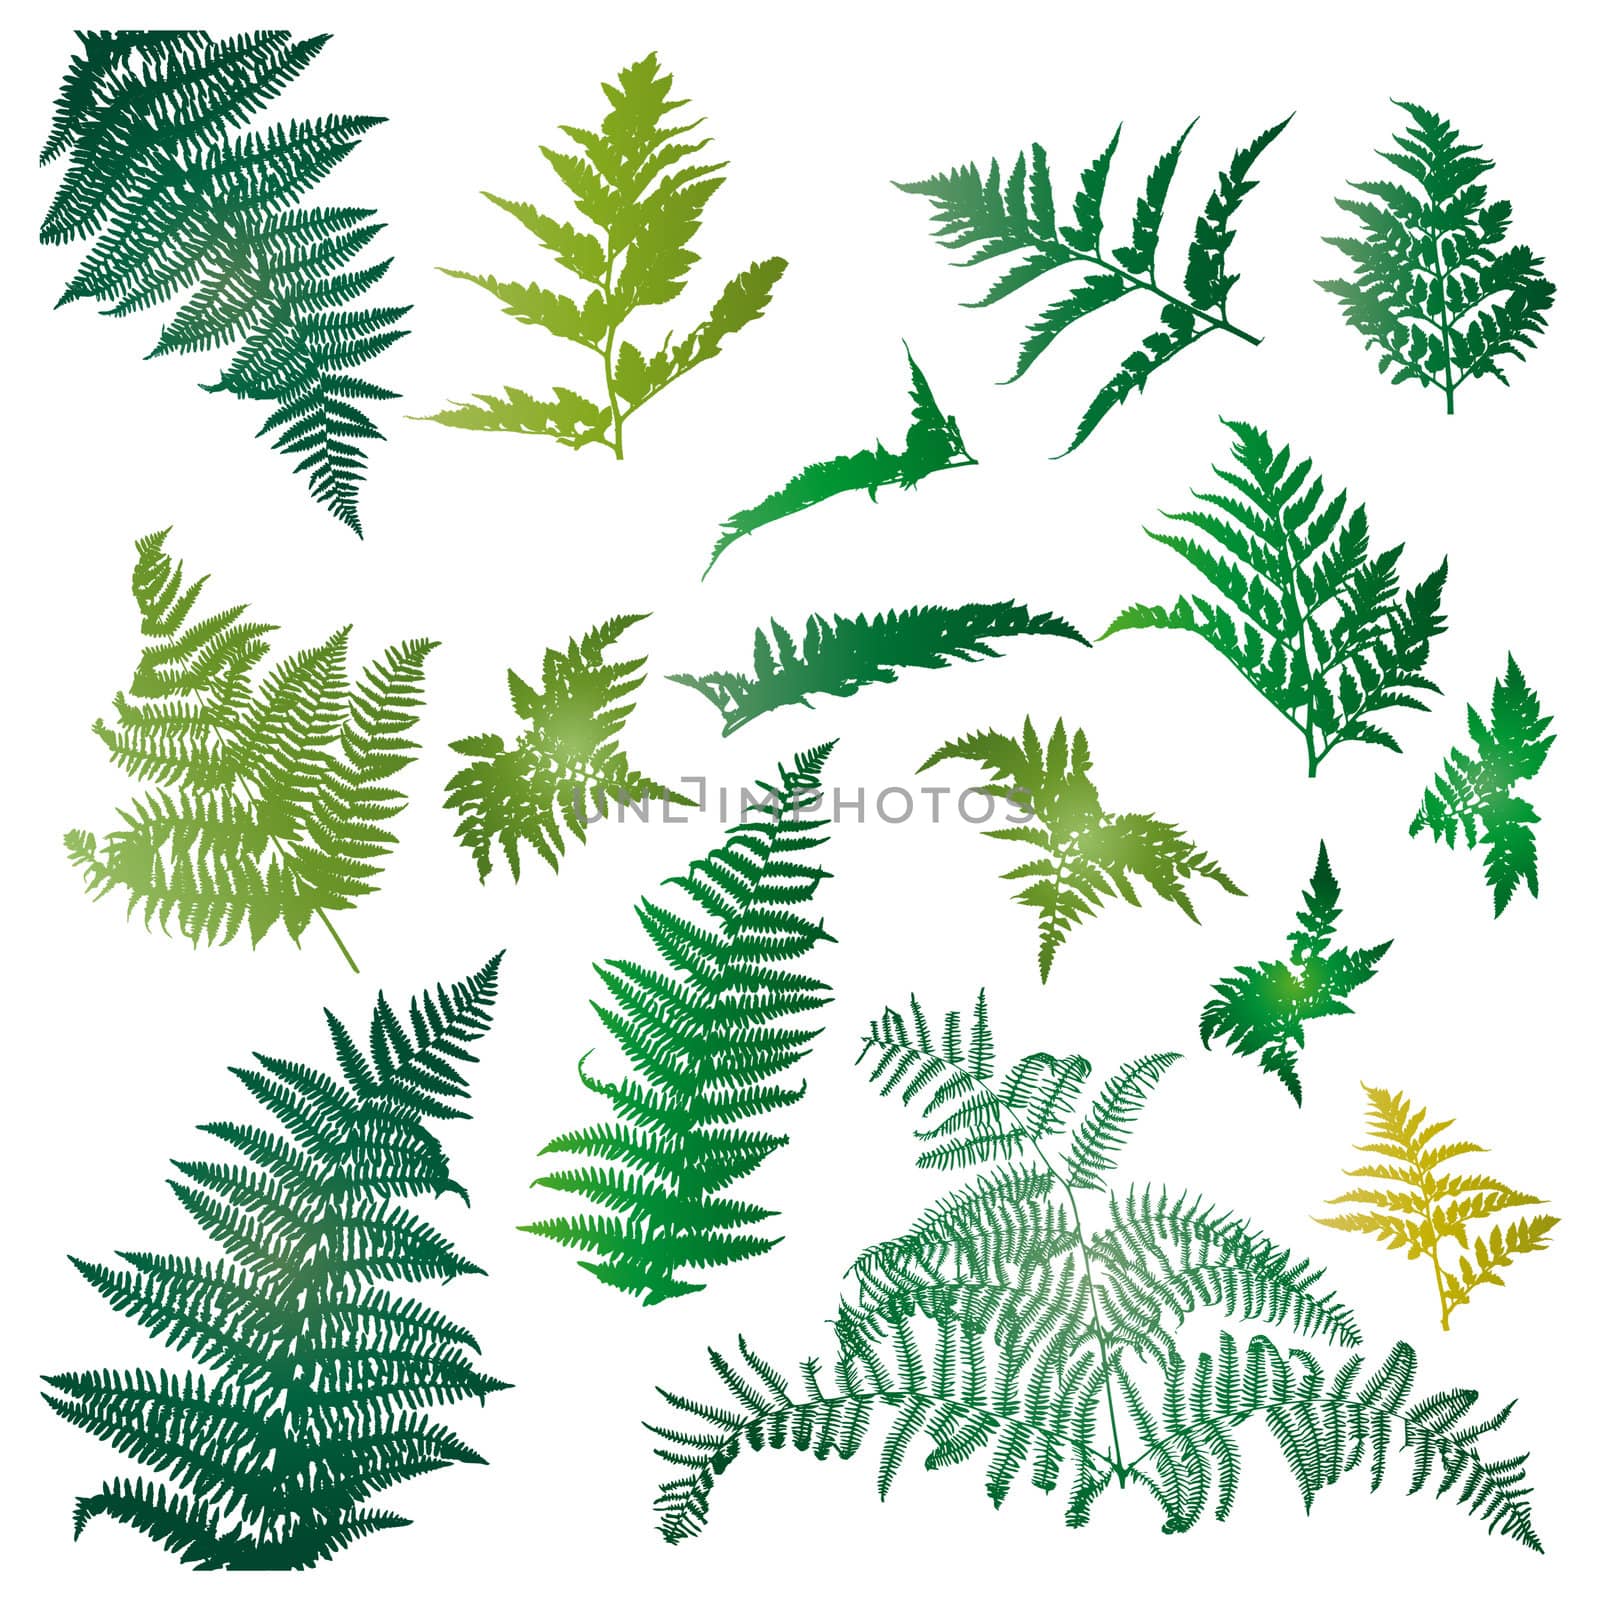 Fern leaves by homydesign